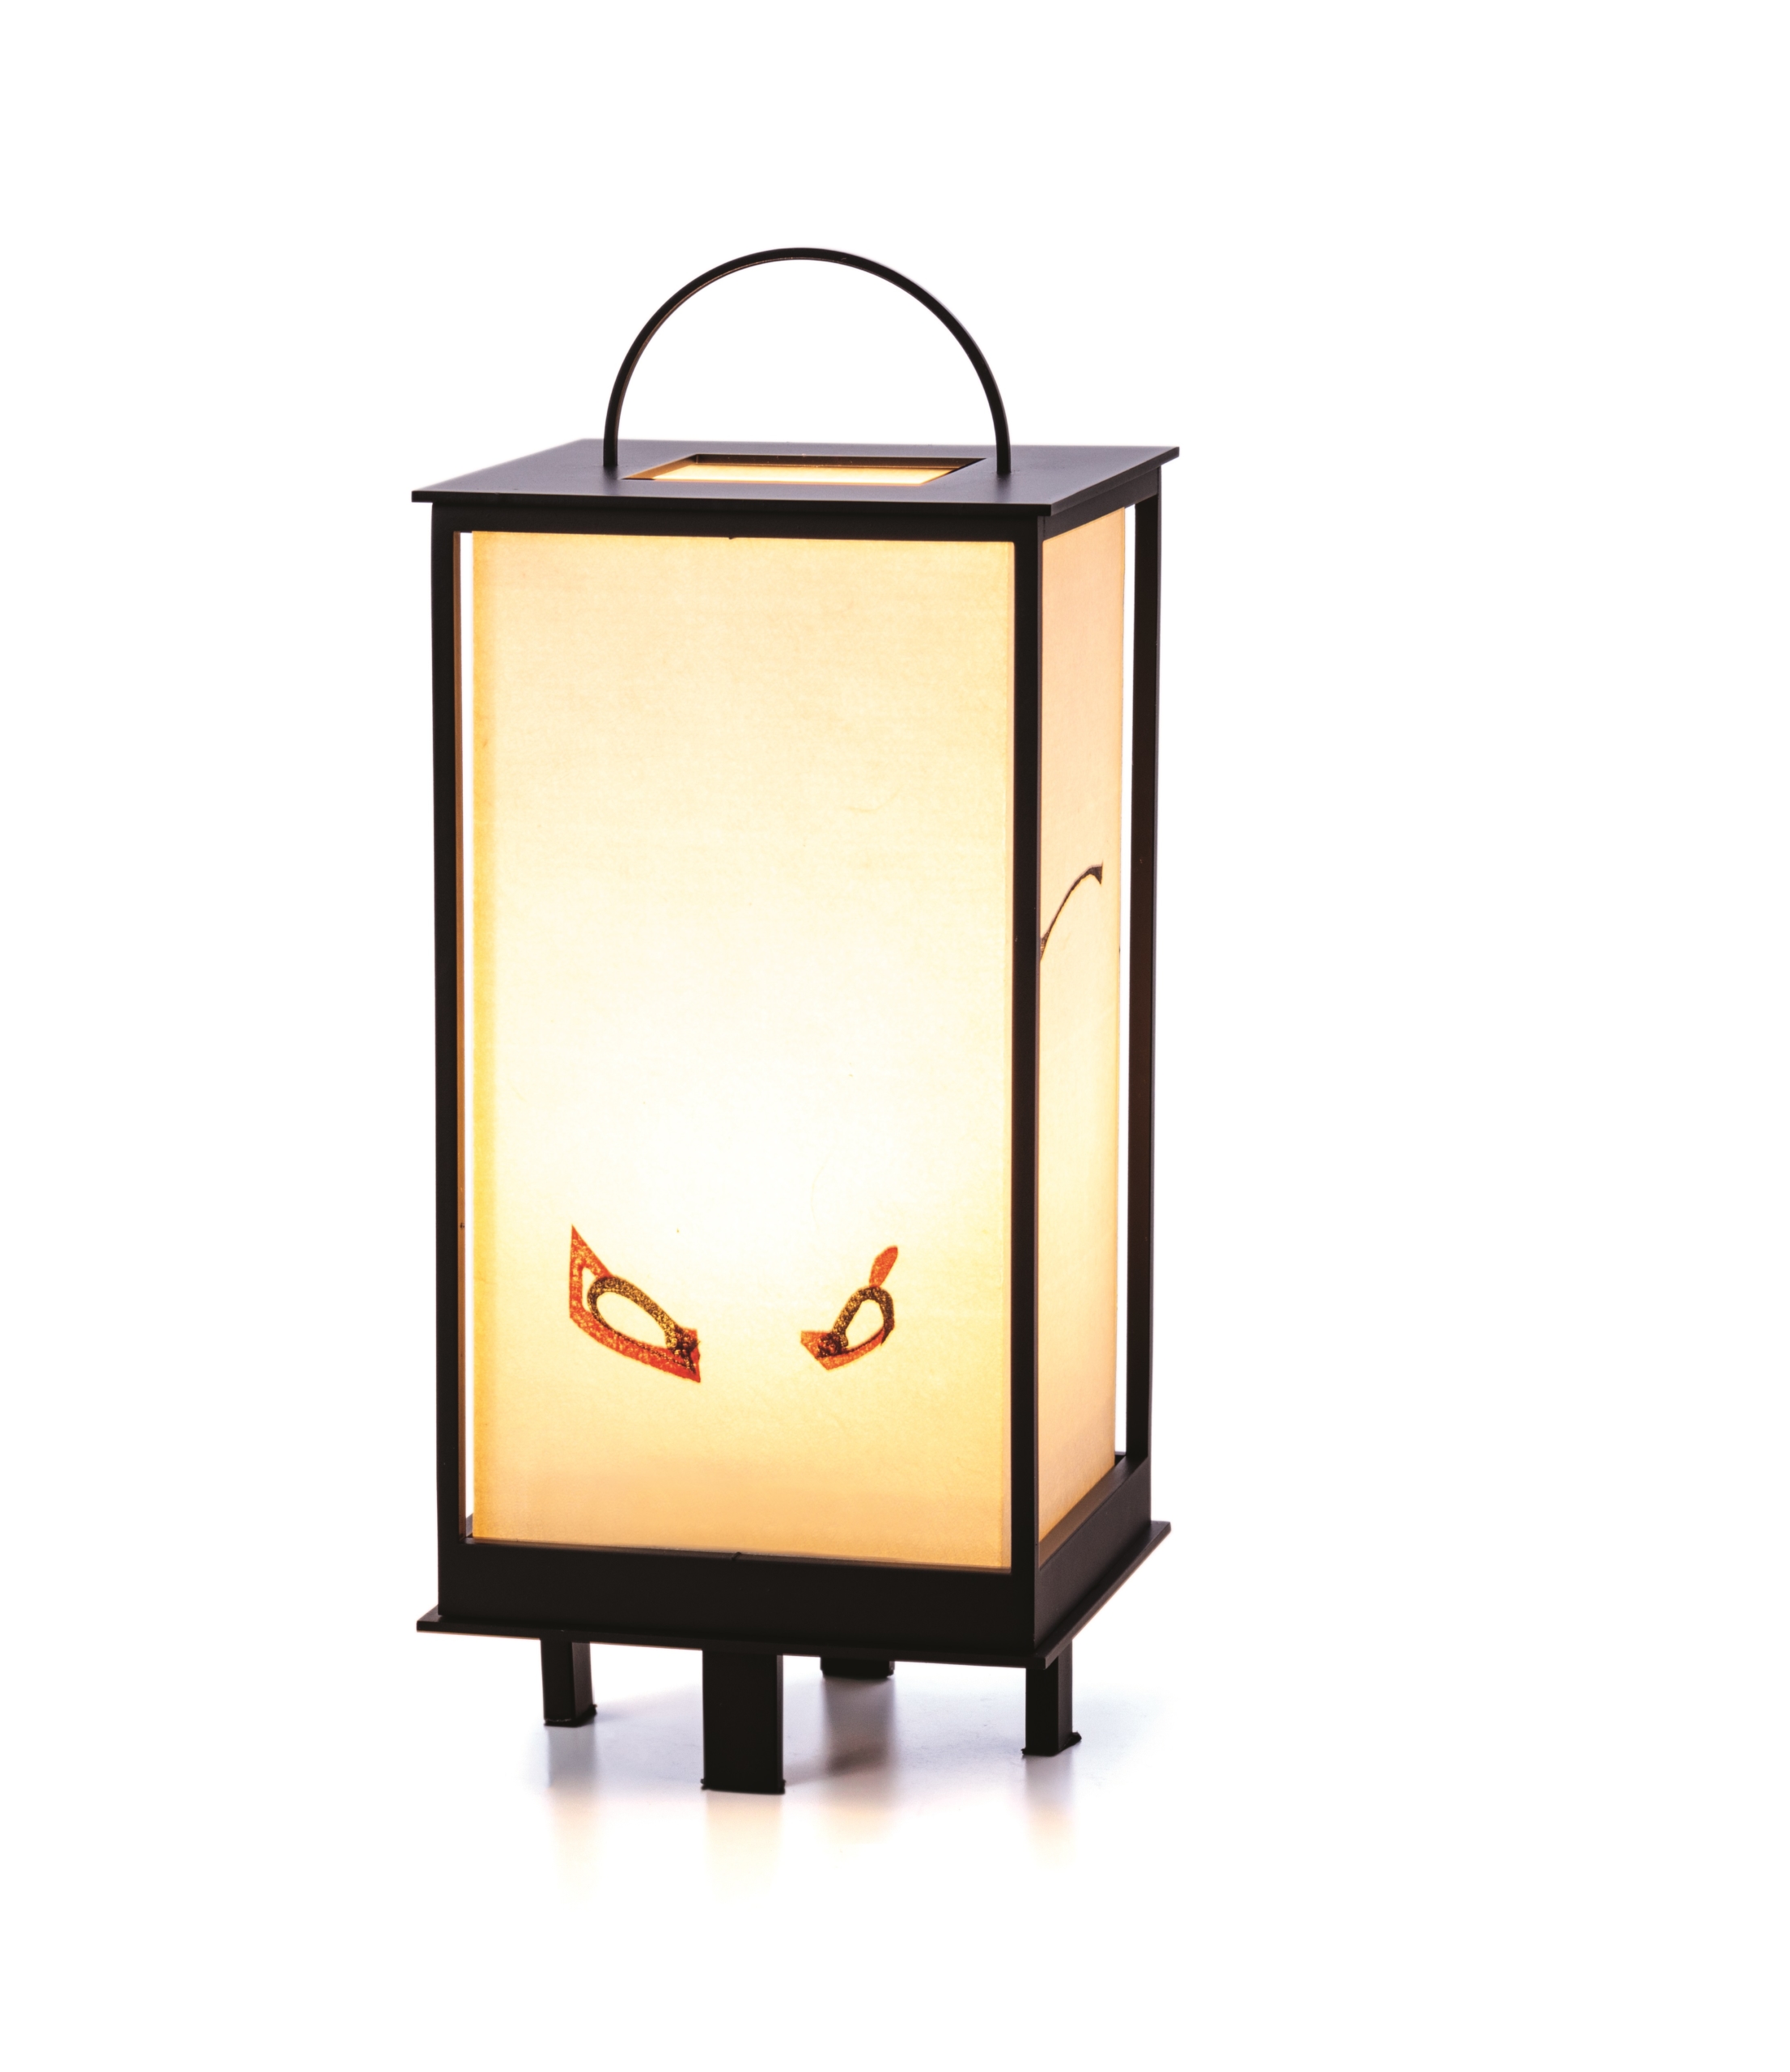 [Takahashi Kobo]Ukiyo-e illuminated by the gentle light of an Andon lantern